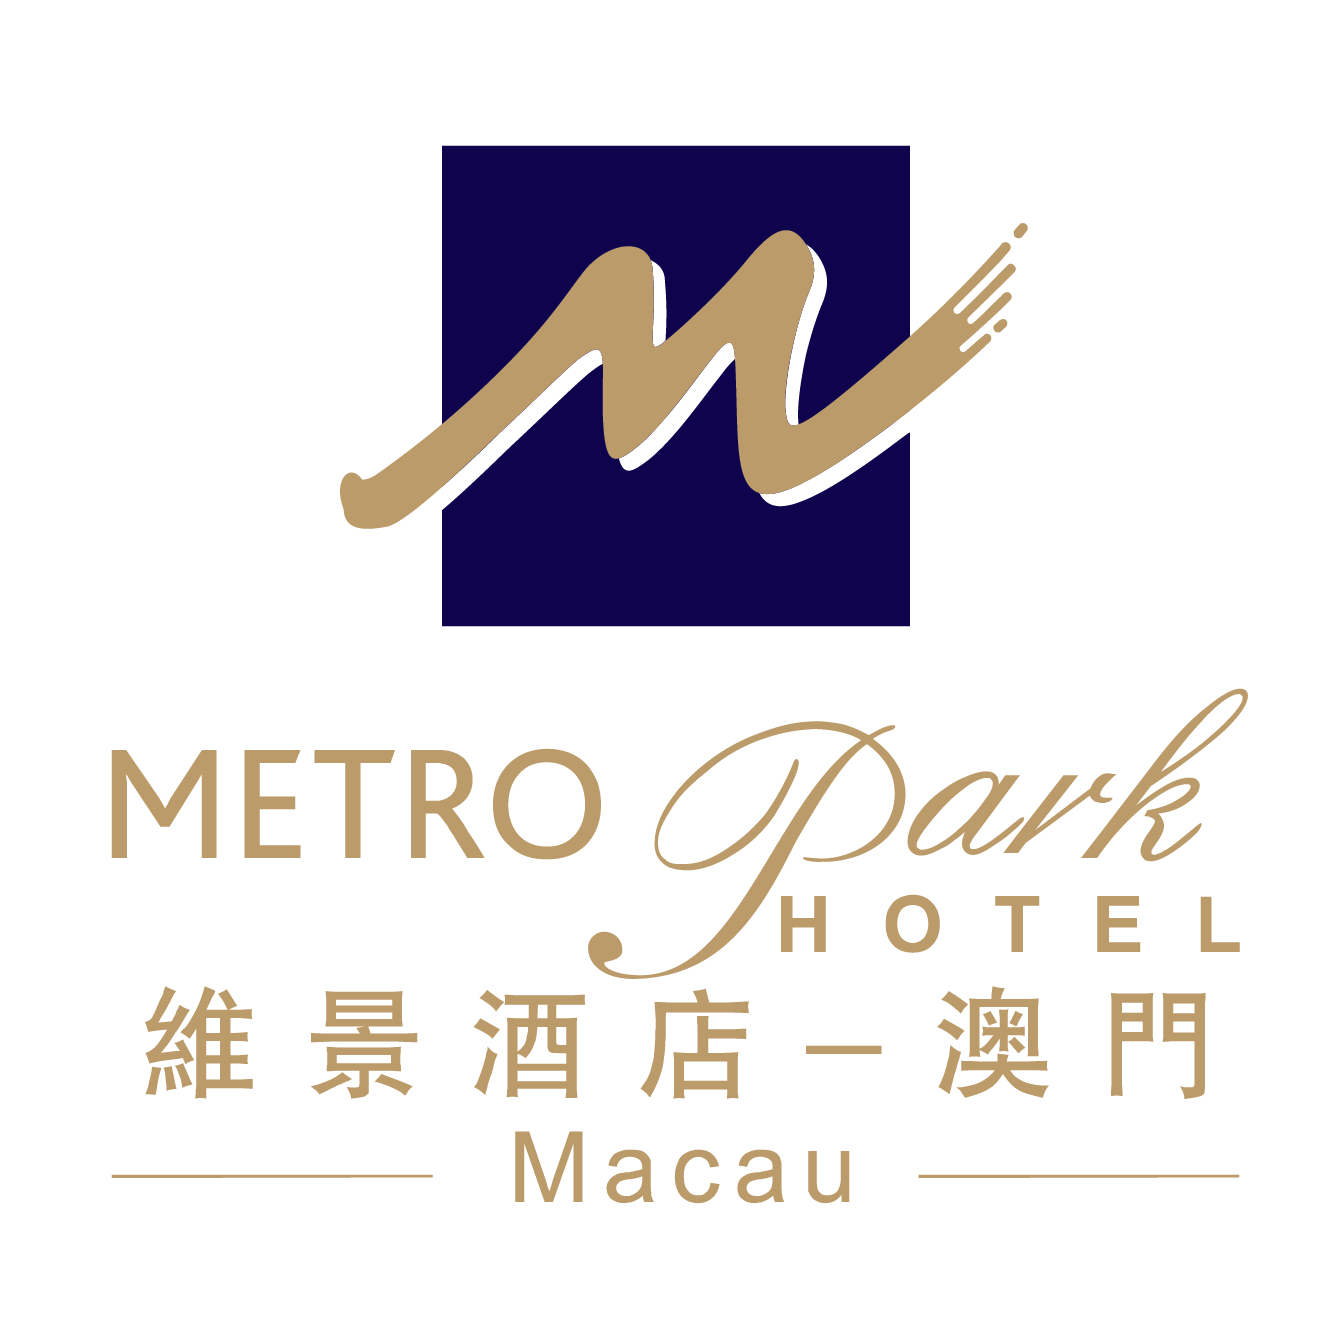 Metropark Hotel